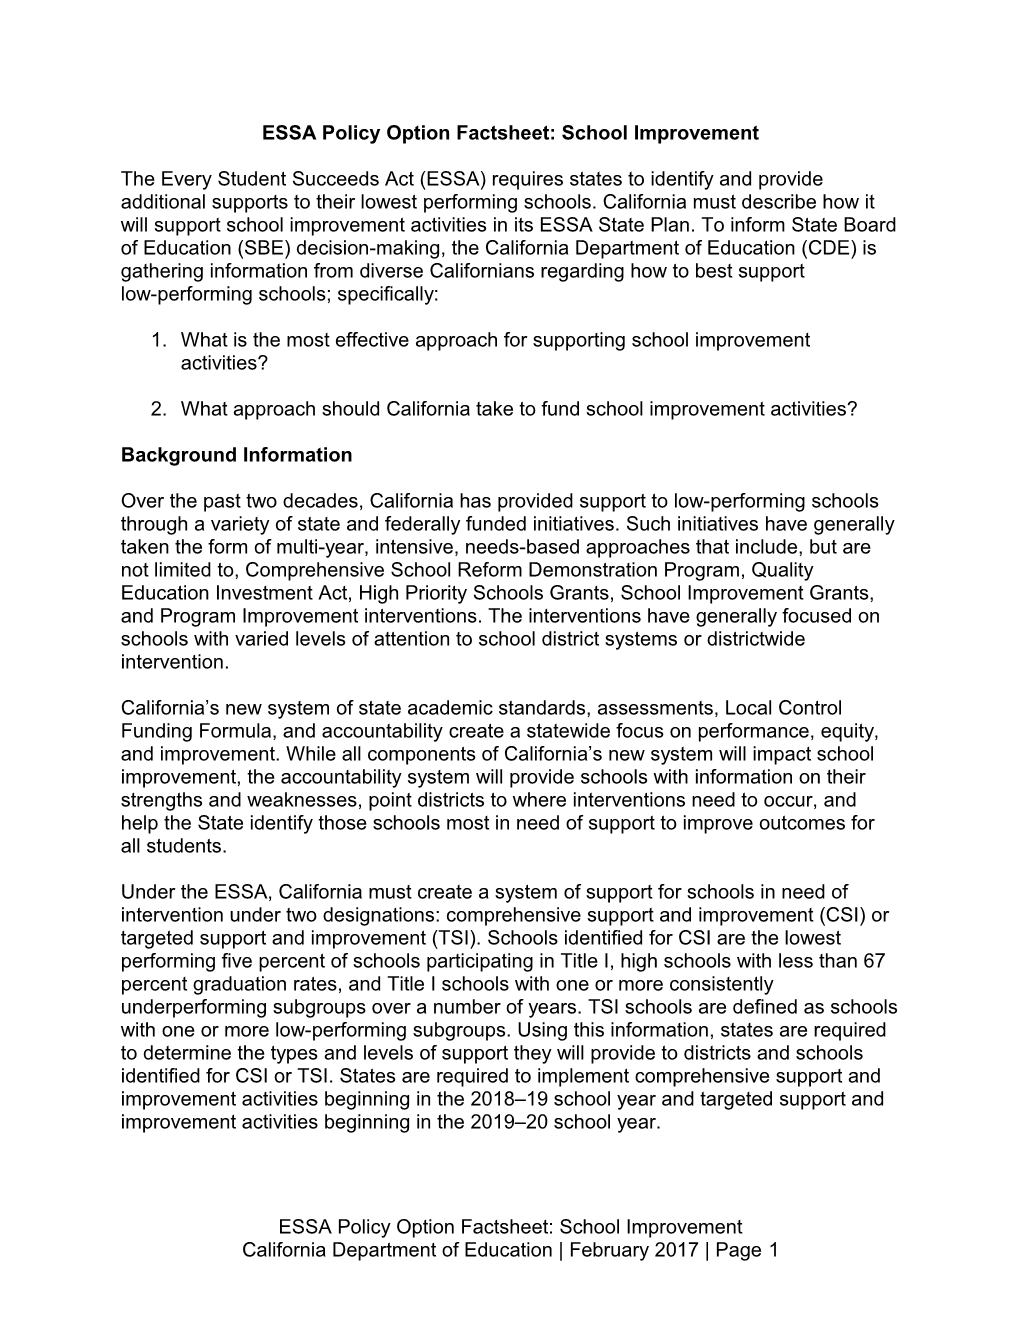 Policy Option Factsheet School Improvement - ESSA (CA Dept of Education)